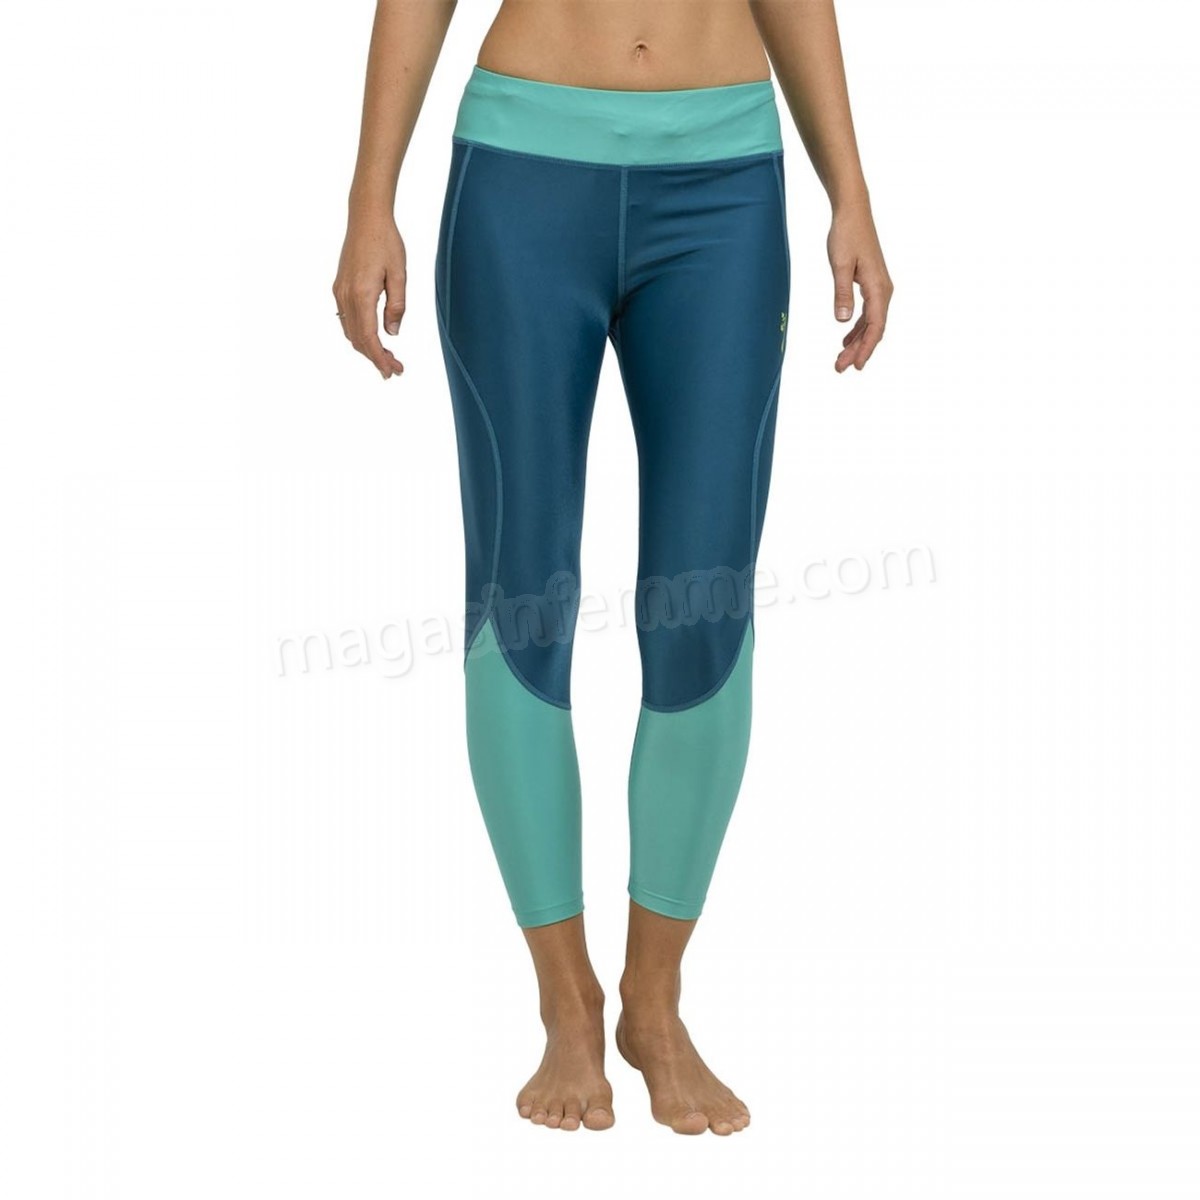 Oxbow-Yoga femme OXBOW Legging RITA en solde - -2